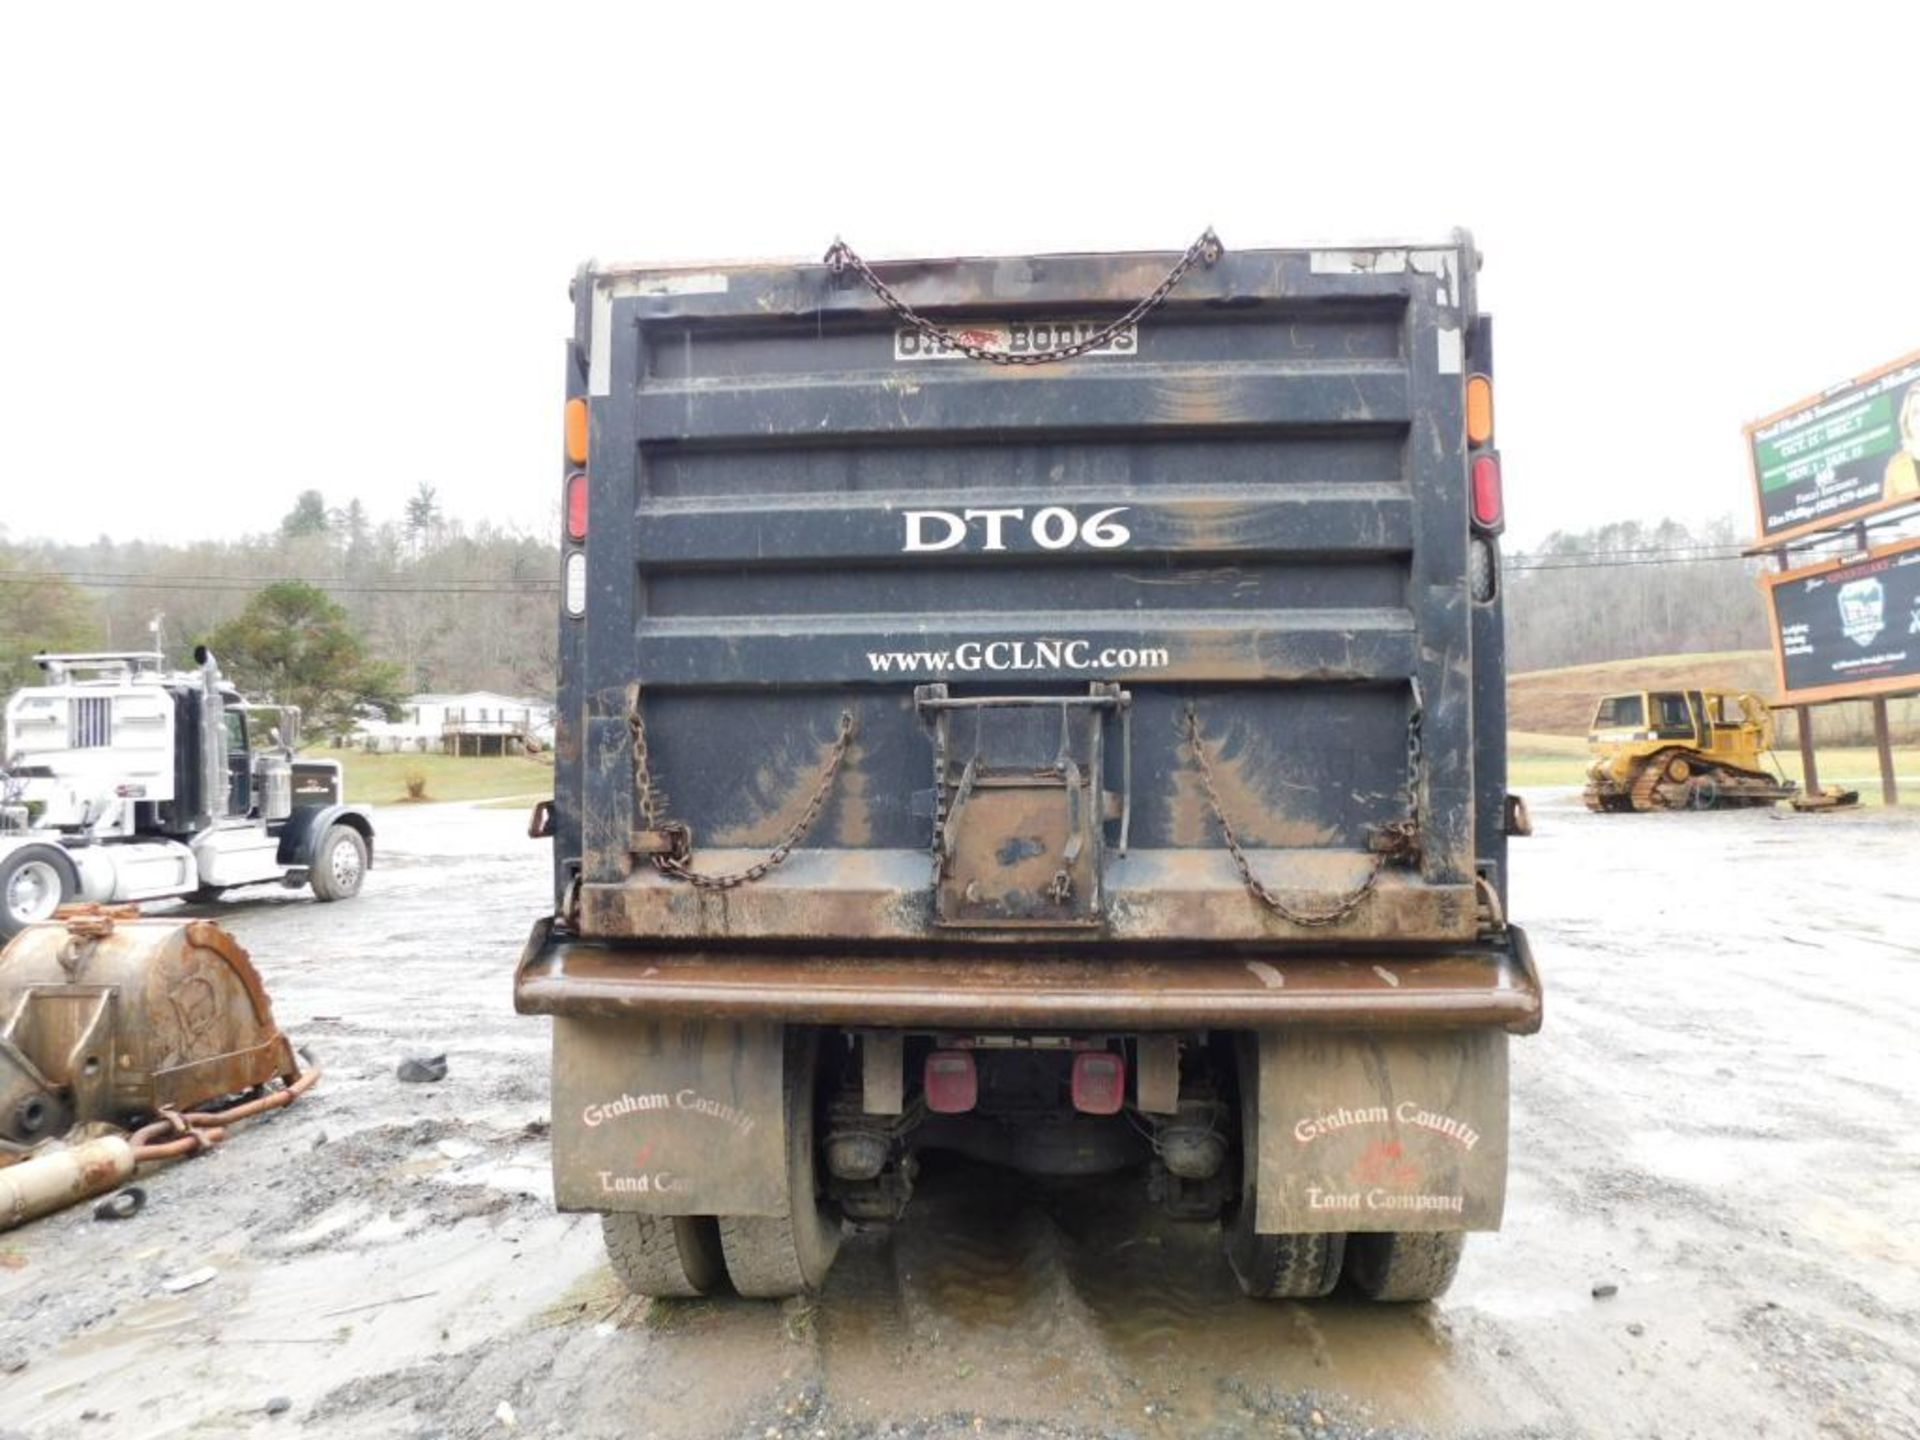 2017 Mack GV713 Quint-Axle Dump Truck, VIN 1M2AX07C7HMO33546, 289,436 Miles Indicated, DT06 - Image 7 of 9